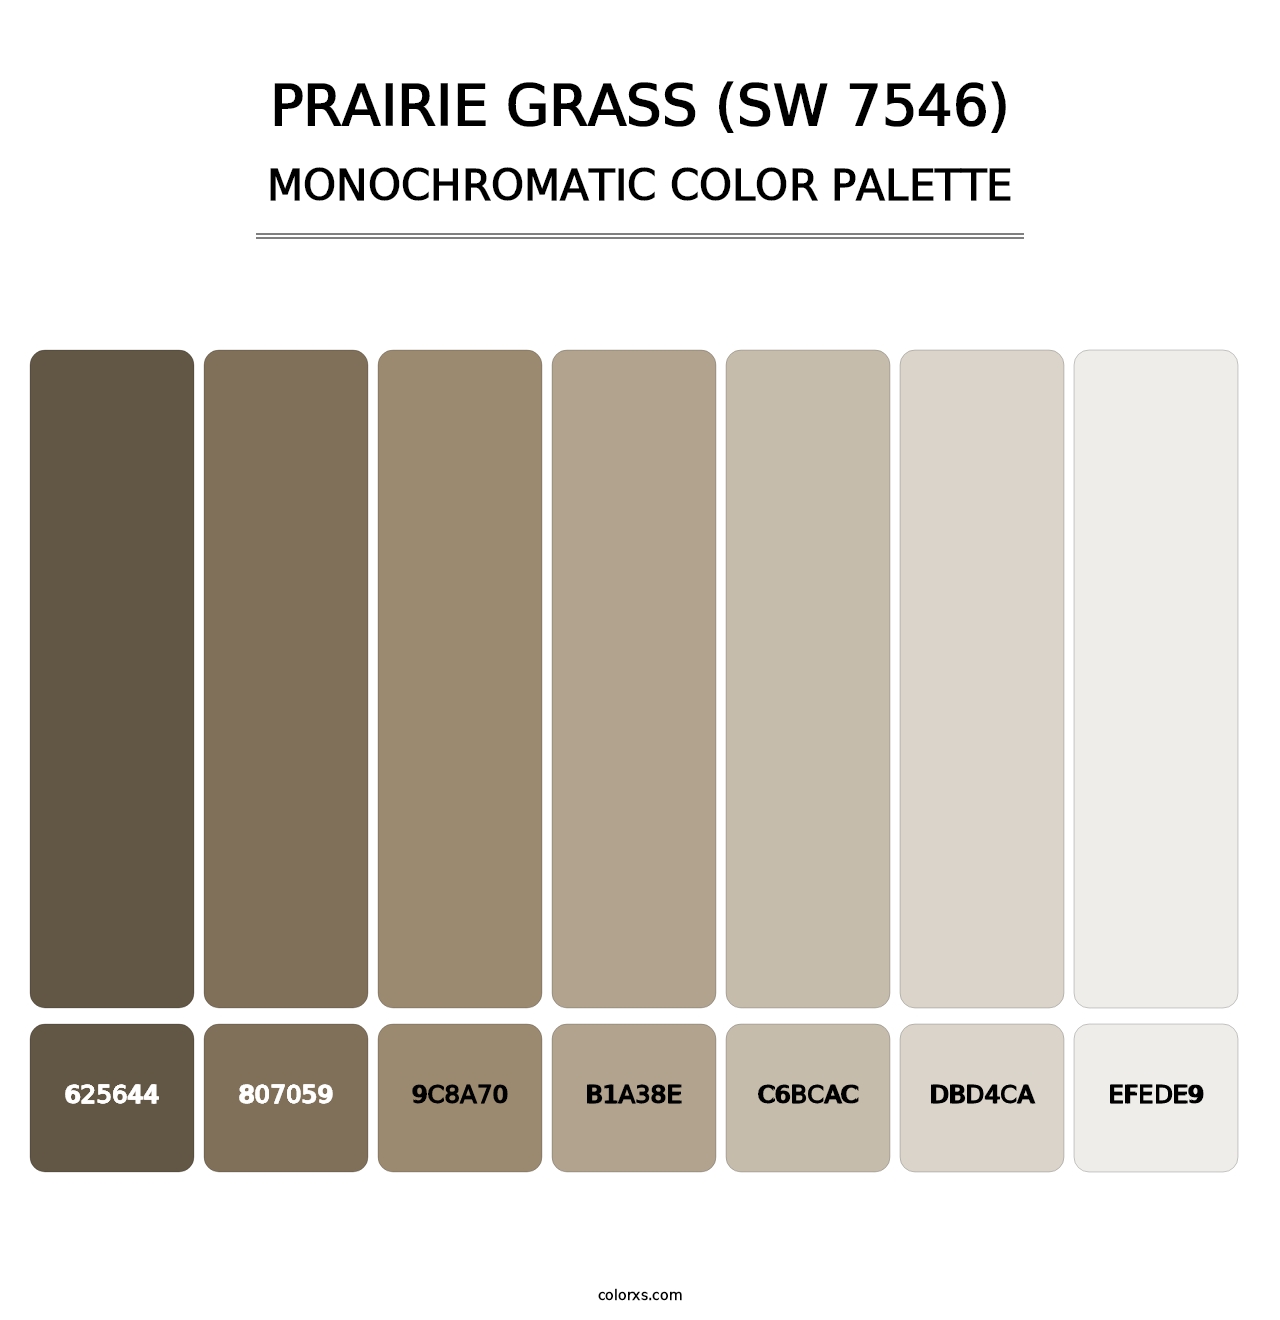 Prairie Grass (SW 7546) - Monochromatic Color Palette